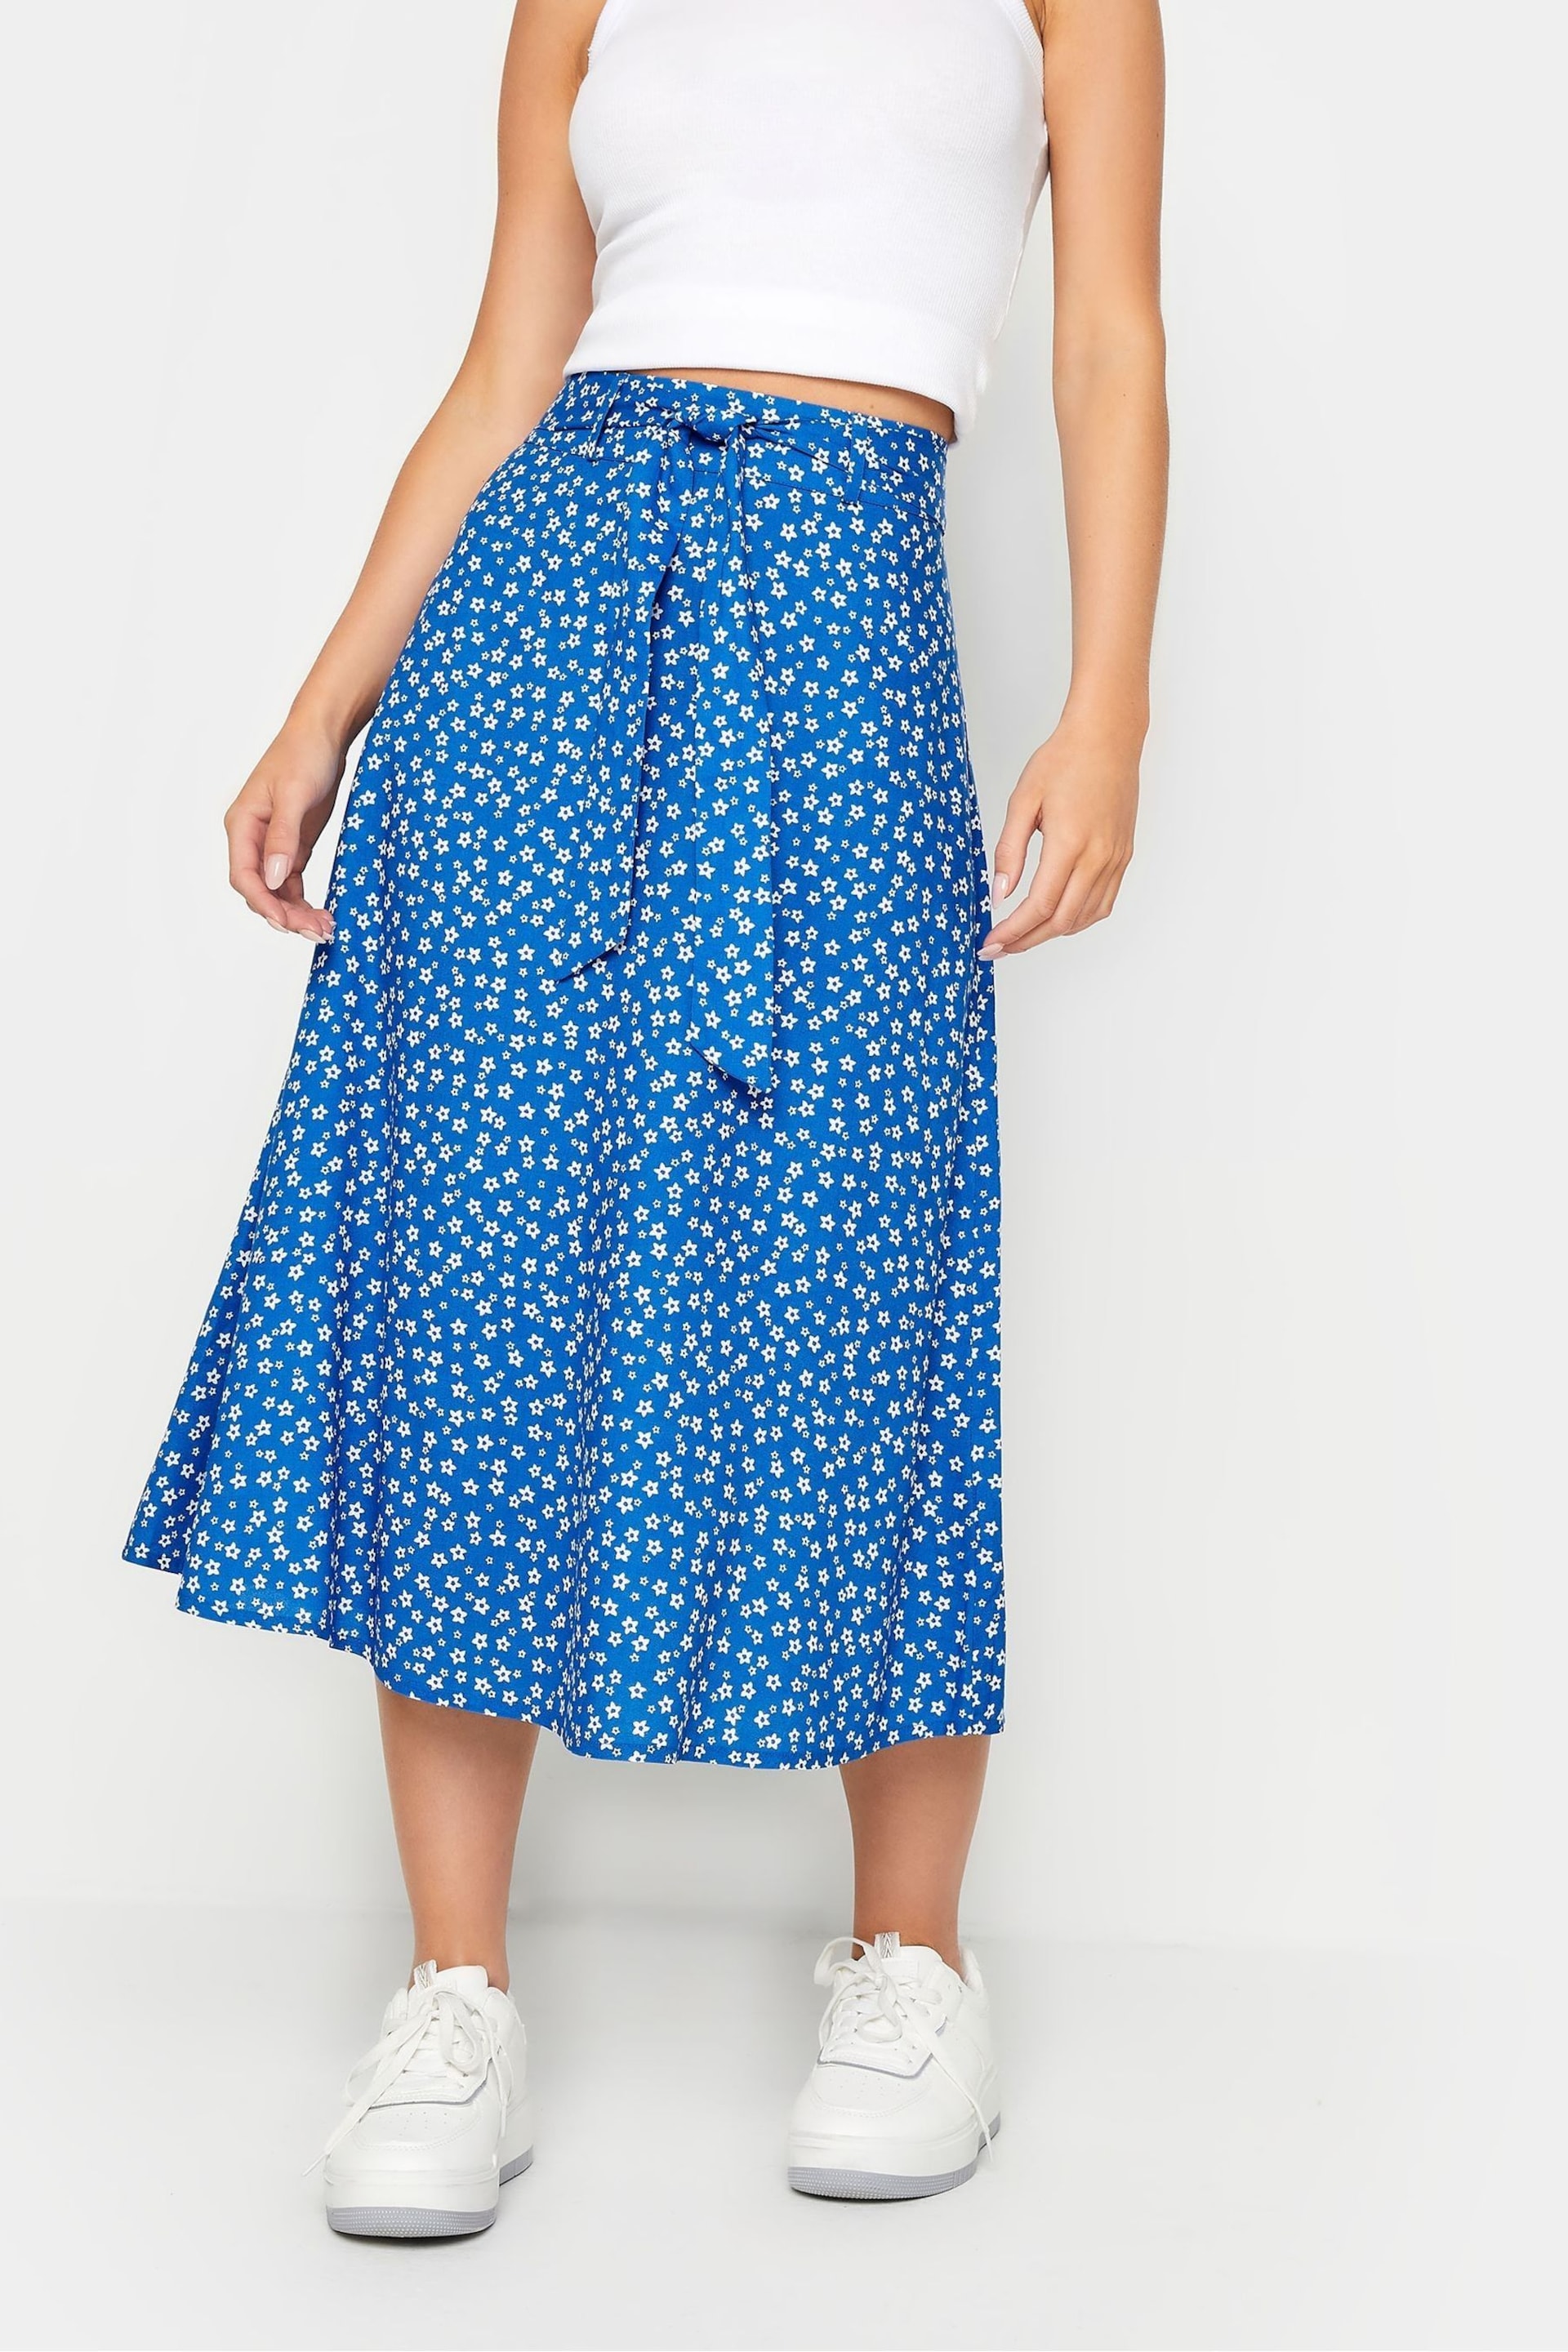 PixieGirl Petite Blue Blue Ditsy Floral Print Midi Skirt - Image 2 of 5